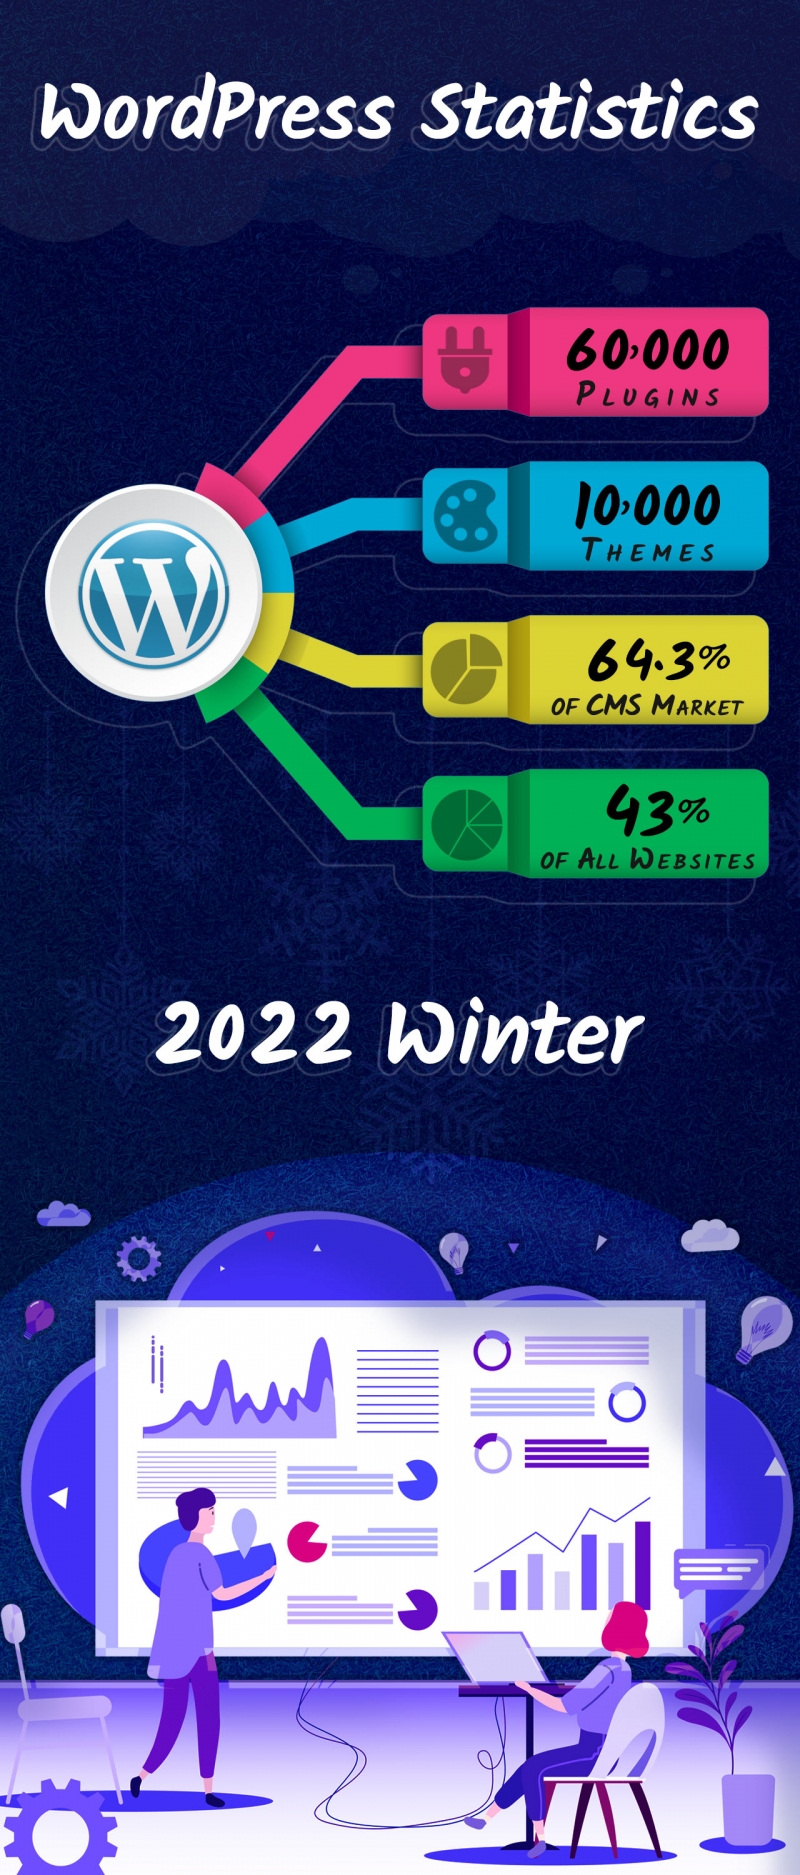 WordPress Statistics in Winter 2022 Infographic